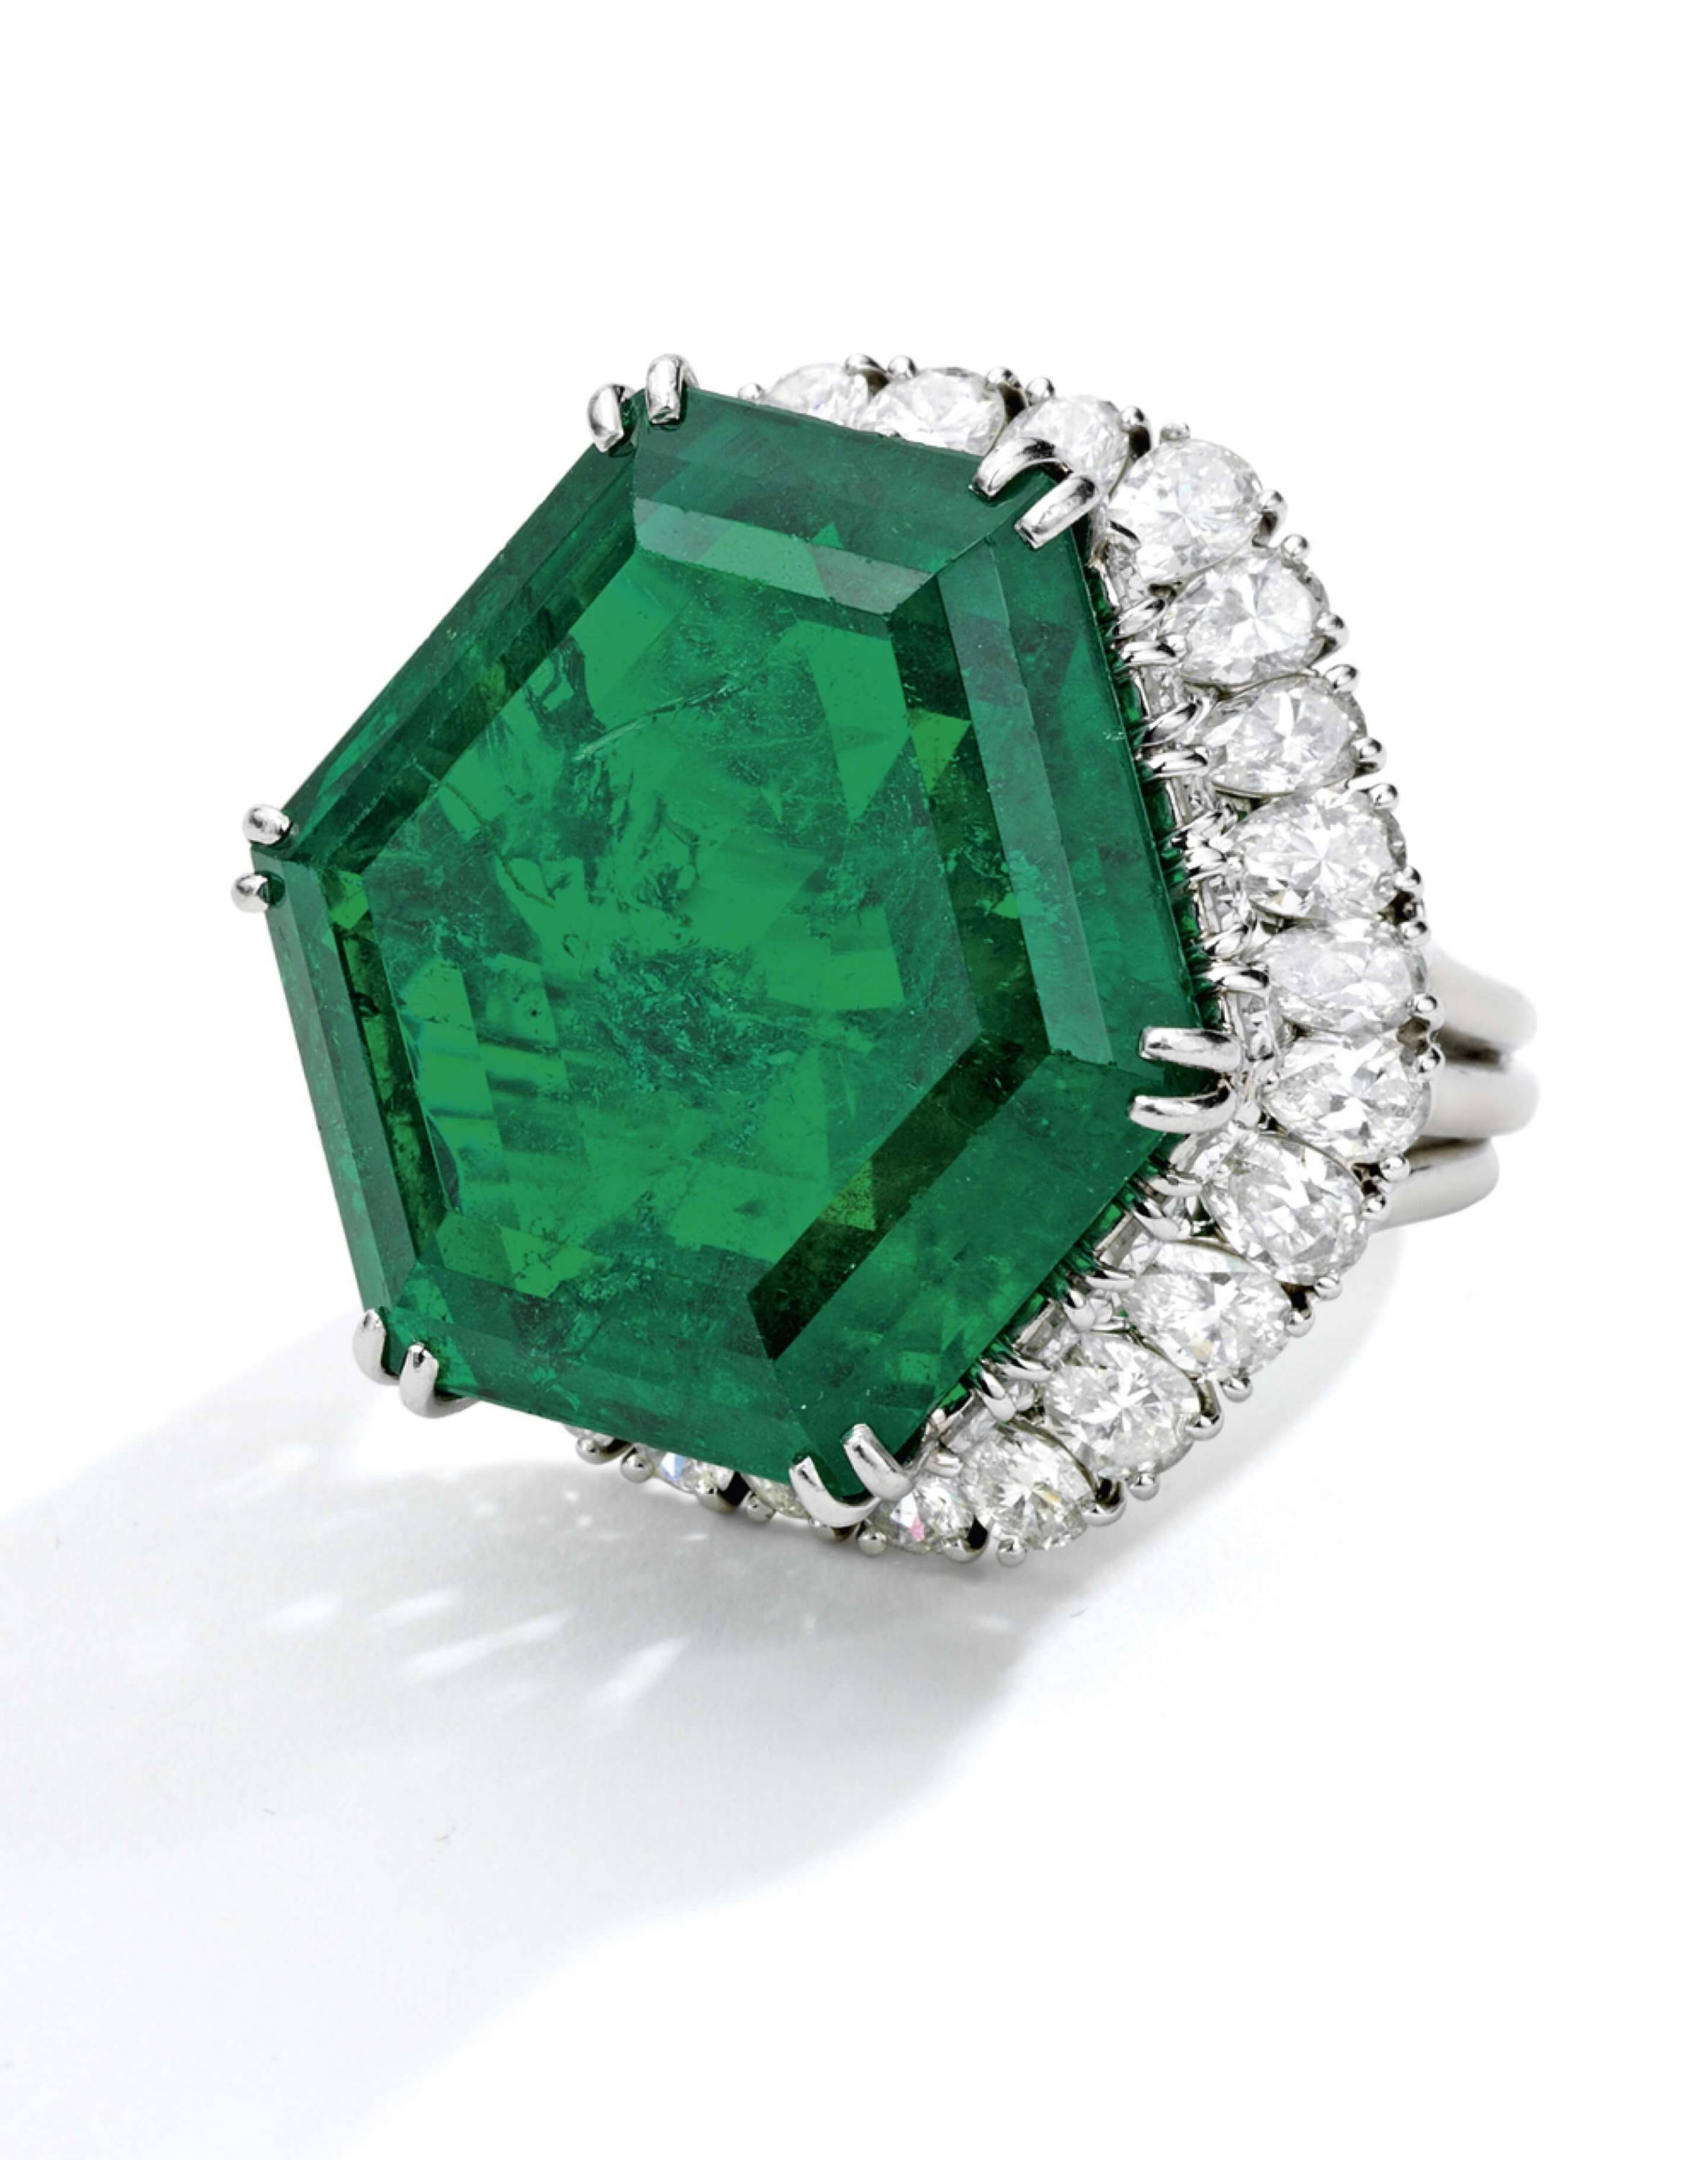 The Stotesbury emerald